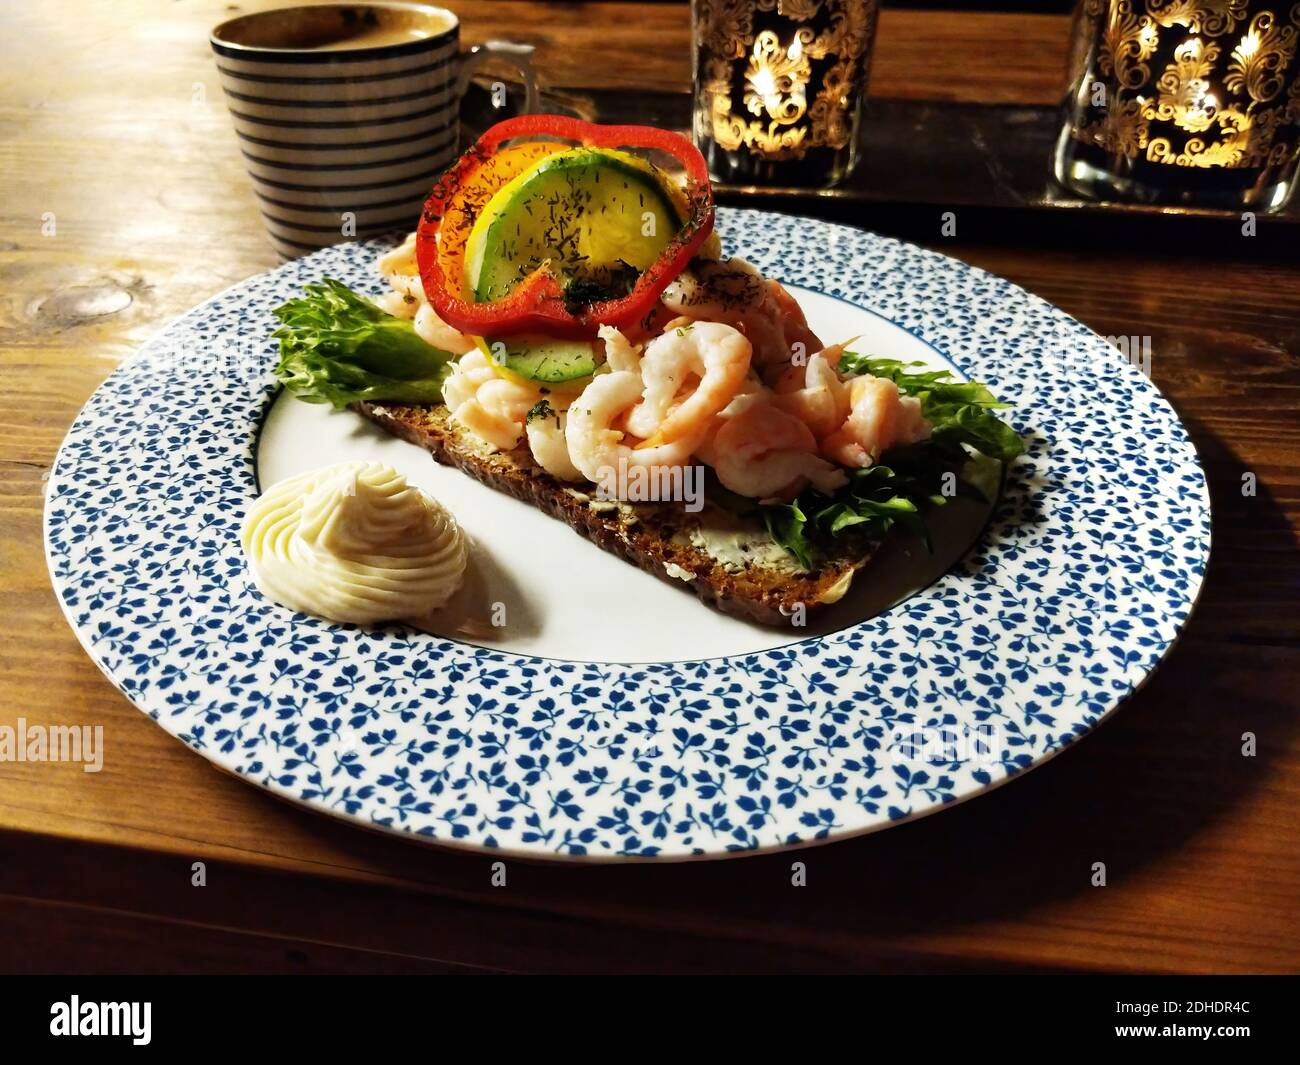 Fresh shrimp on hard bread or toast. Food photography concept. Stock Photo